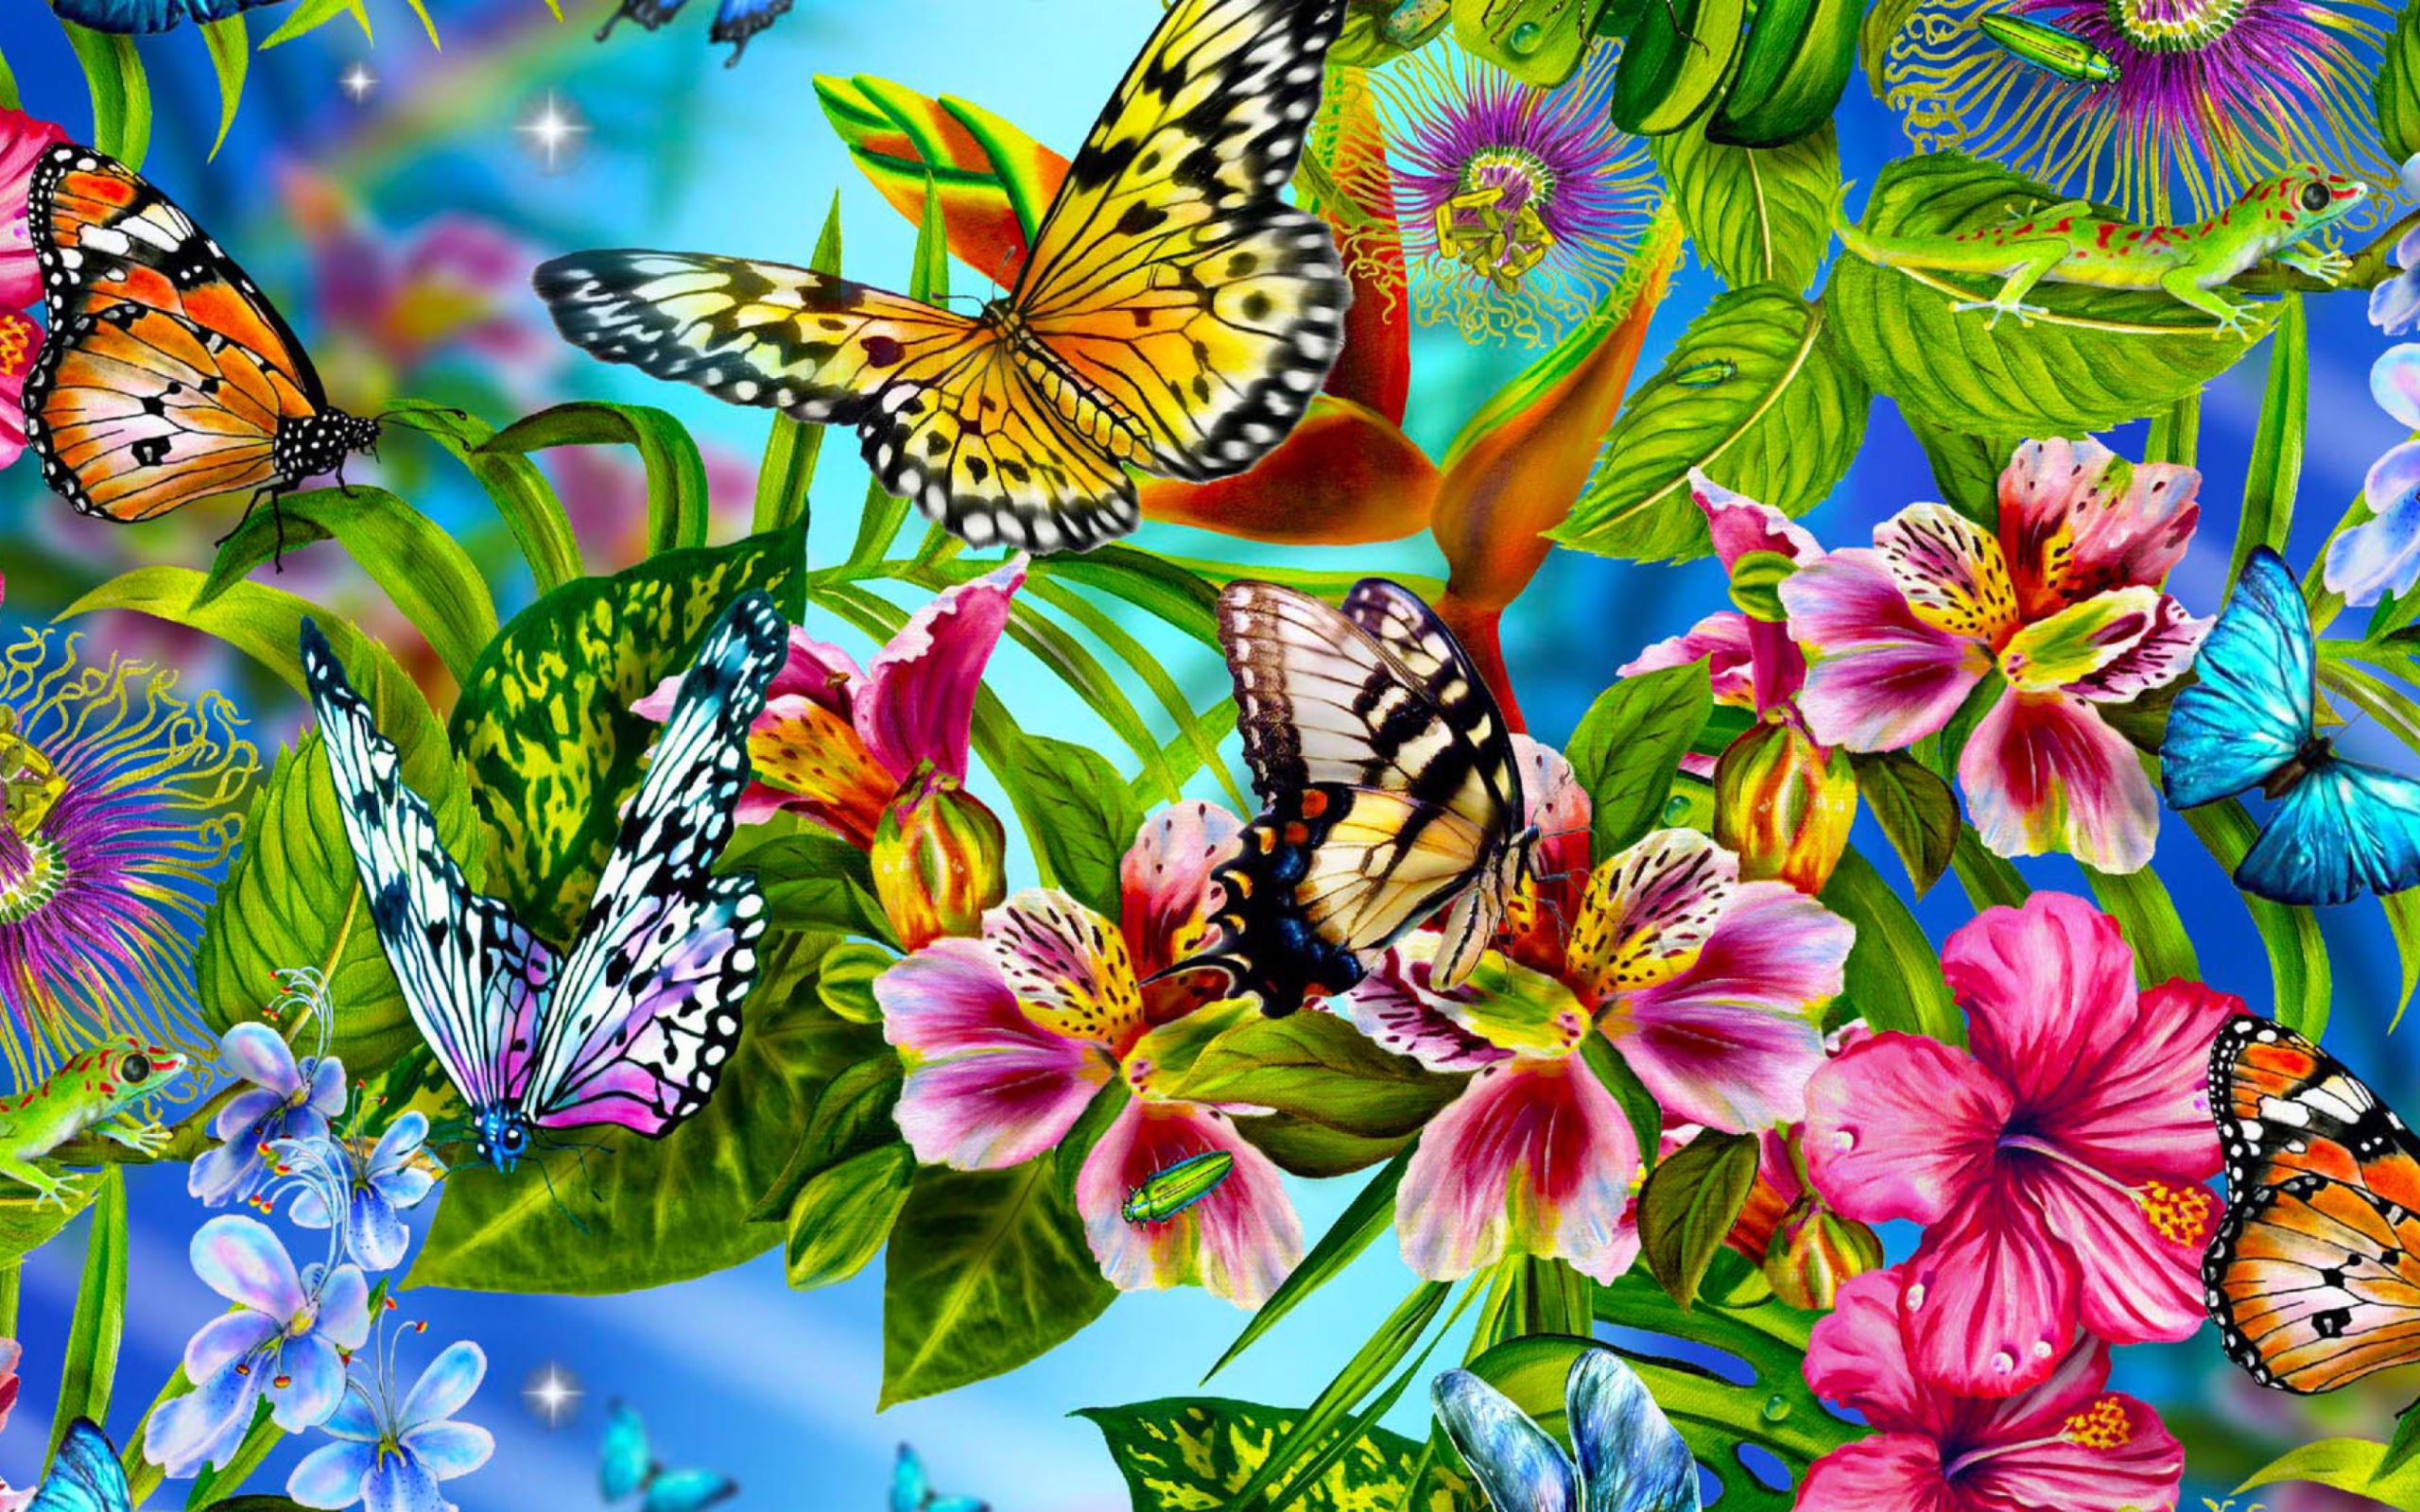 Яркие цветы сказочные. Бабочка на цветке. Заставка бабочки. Яркие цветы и бабочки. Красивые бабочки на цветах.